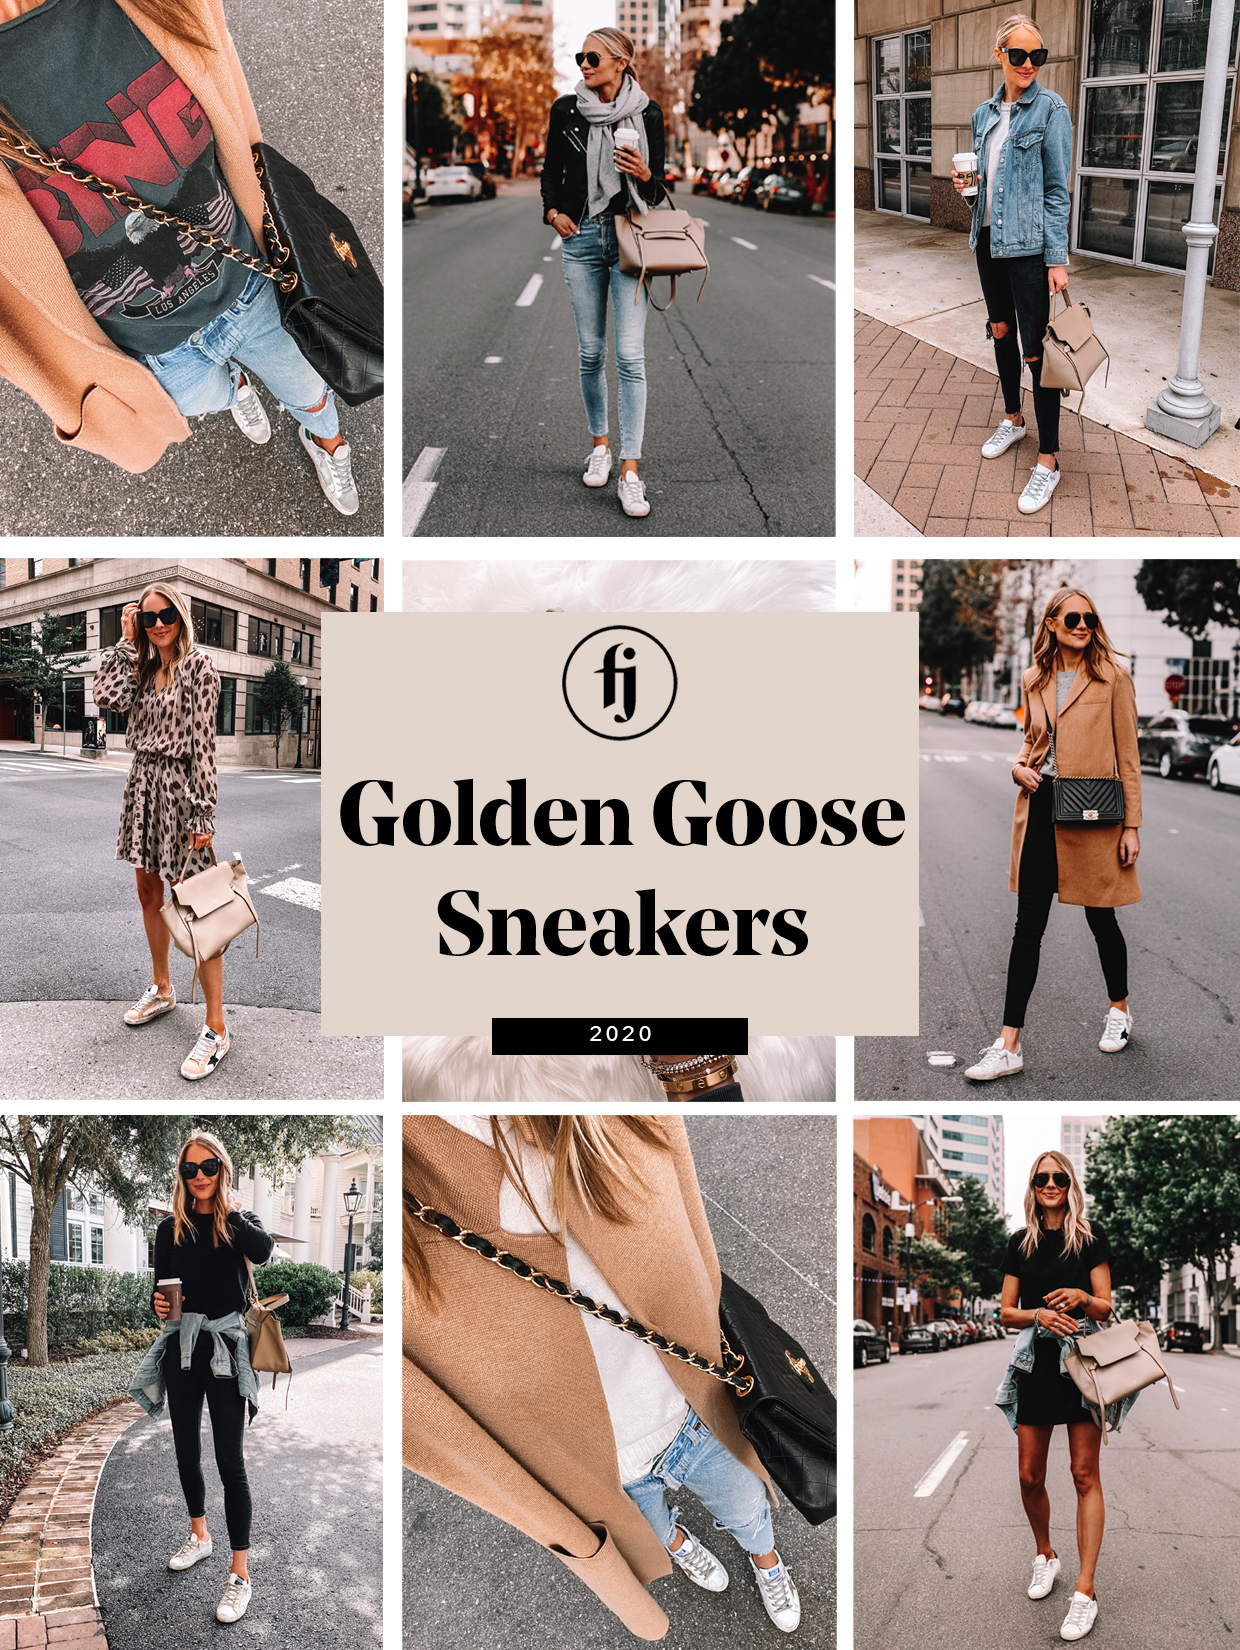 del eftermiddag musiker Are Golden Goose Sneakers Worth It? - Fashion Jackson